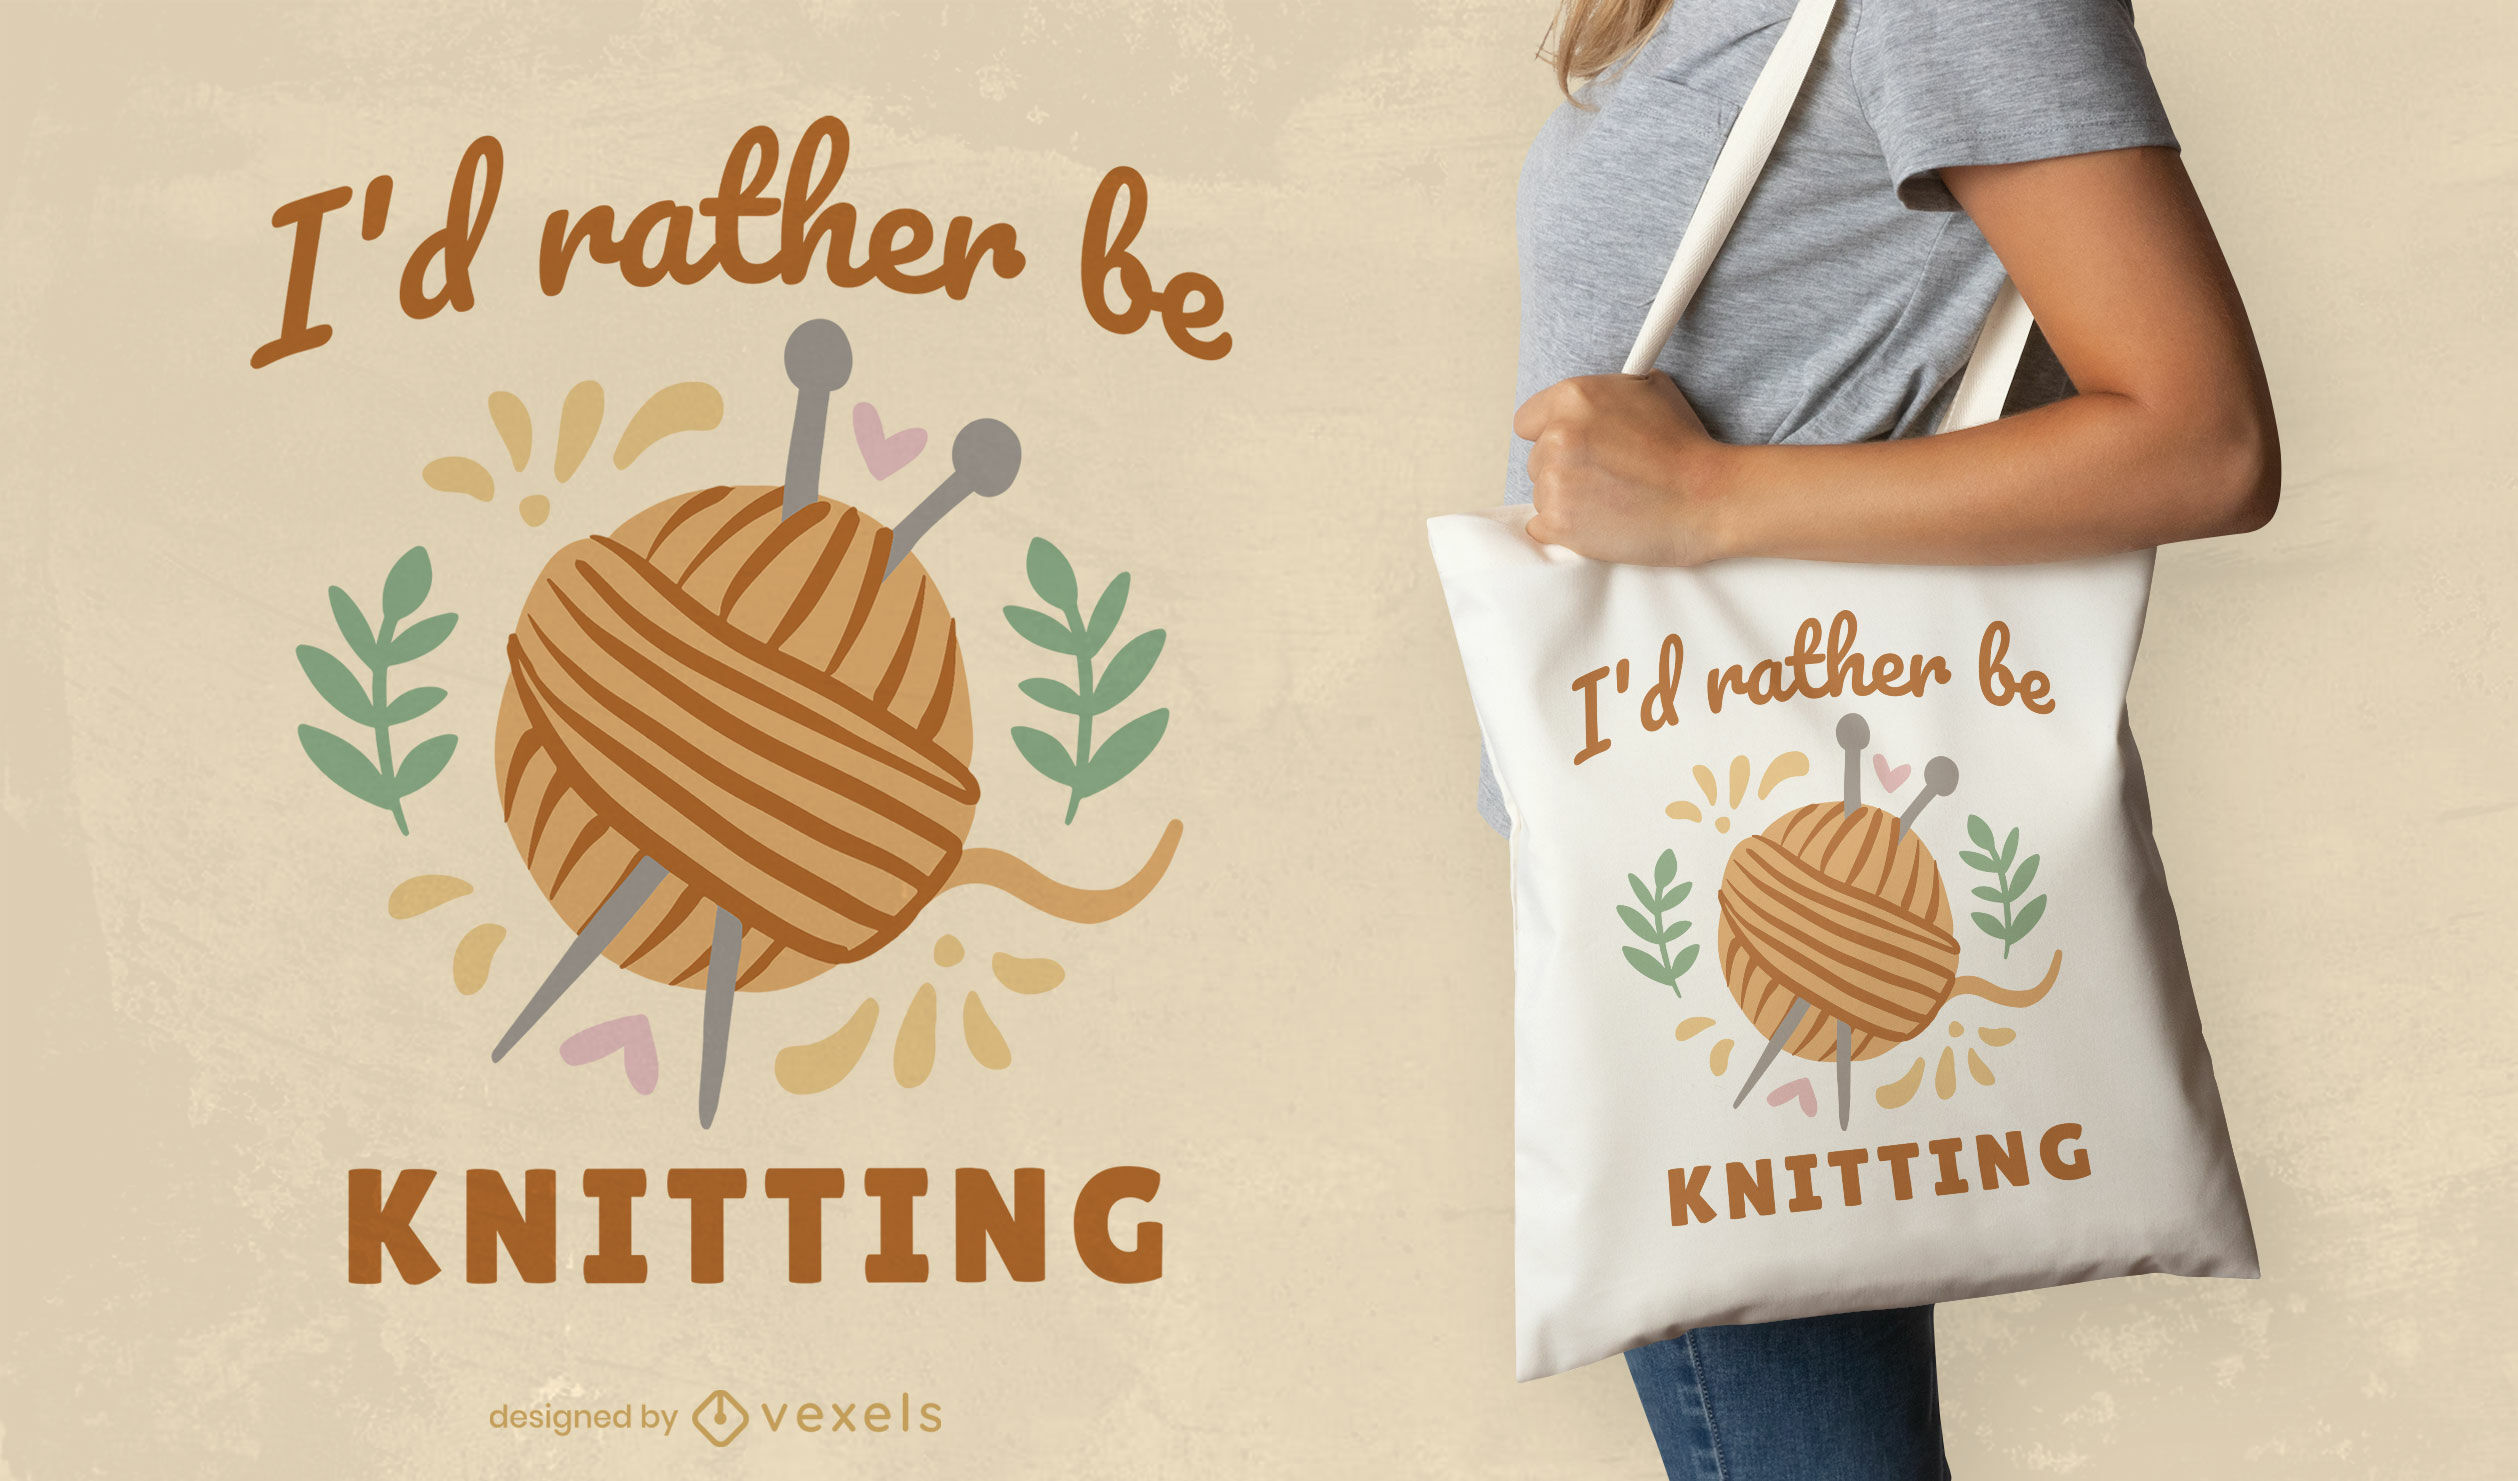 Knitting hobby needles and wool tote bag design